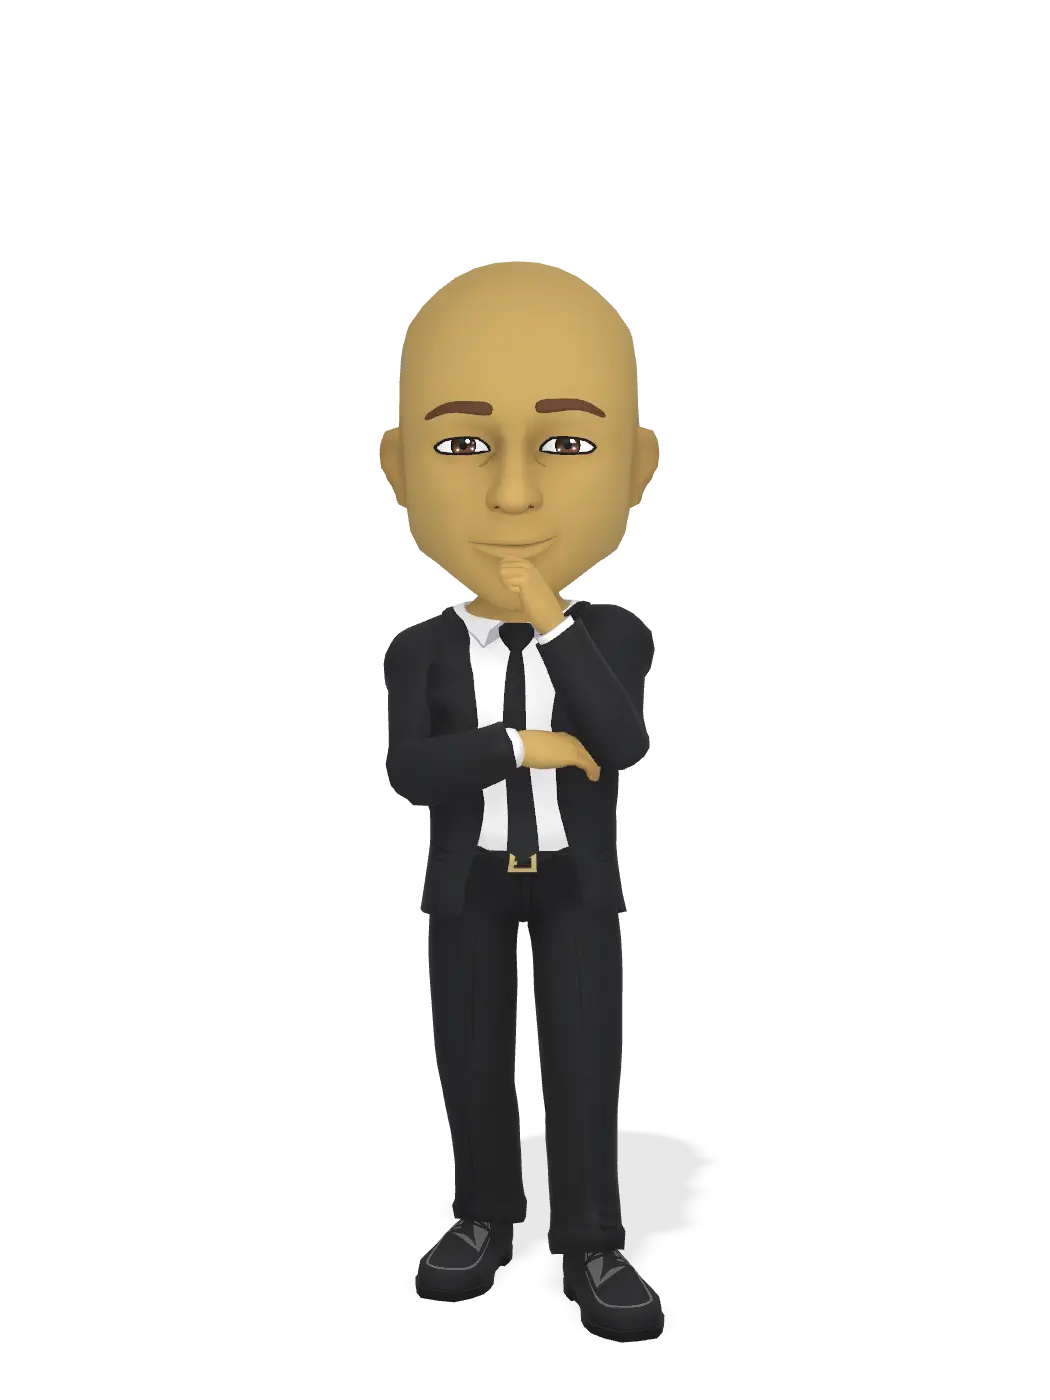 3D Bitmoji for rjeff24 avatar